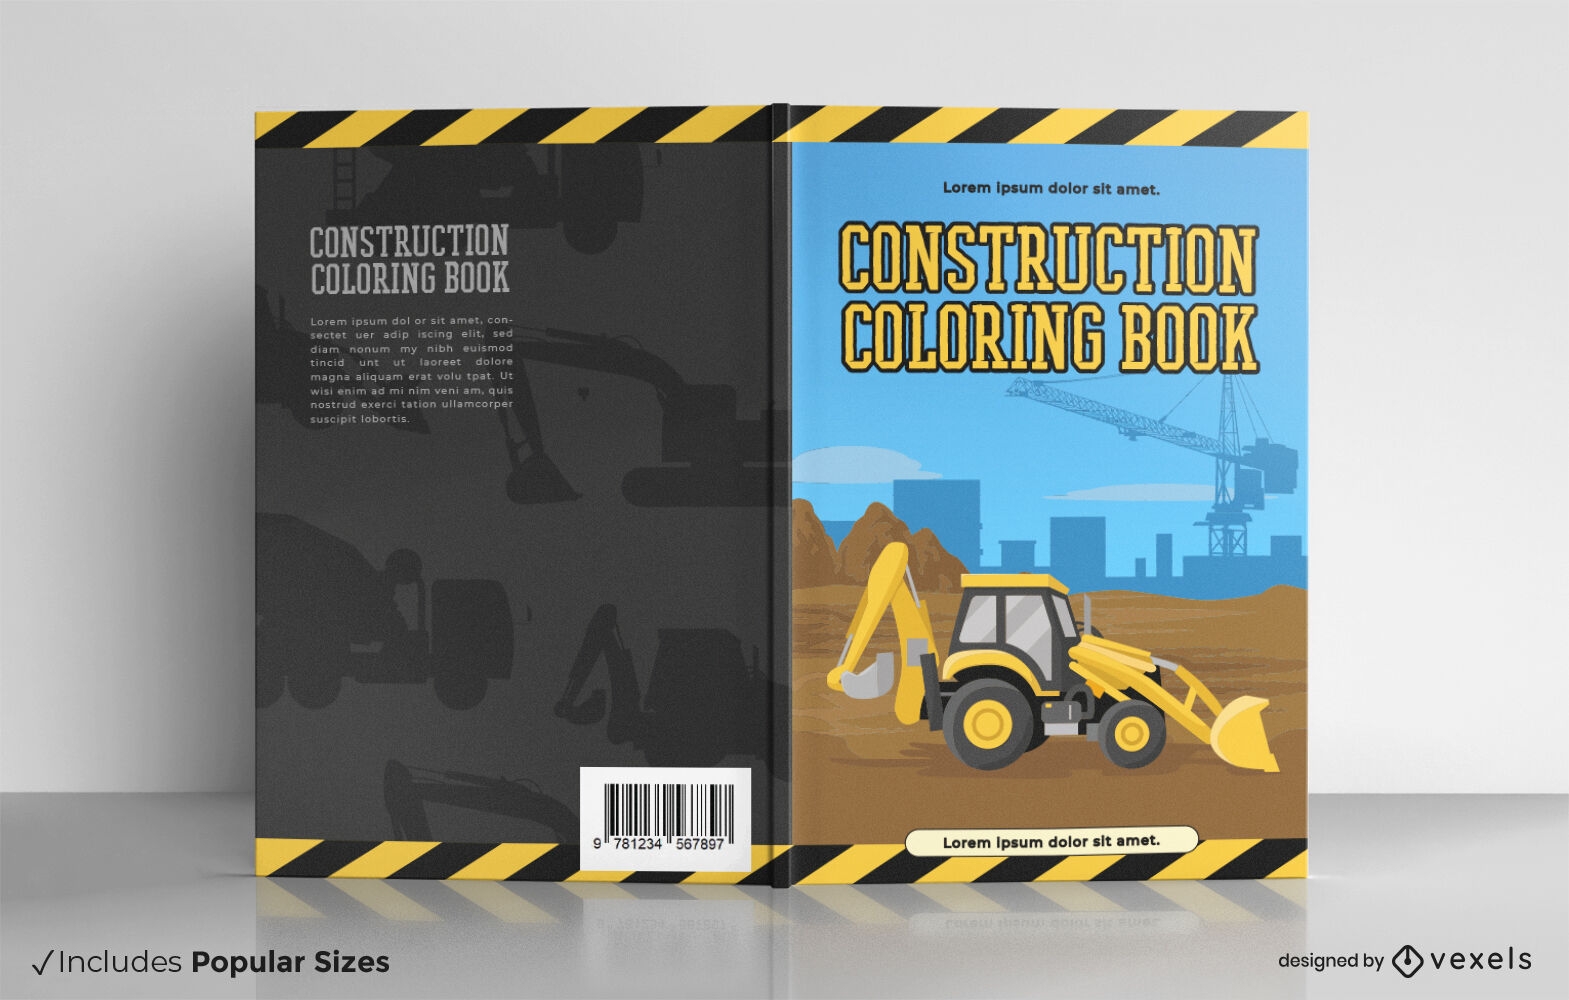 Construction coloring book cover design